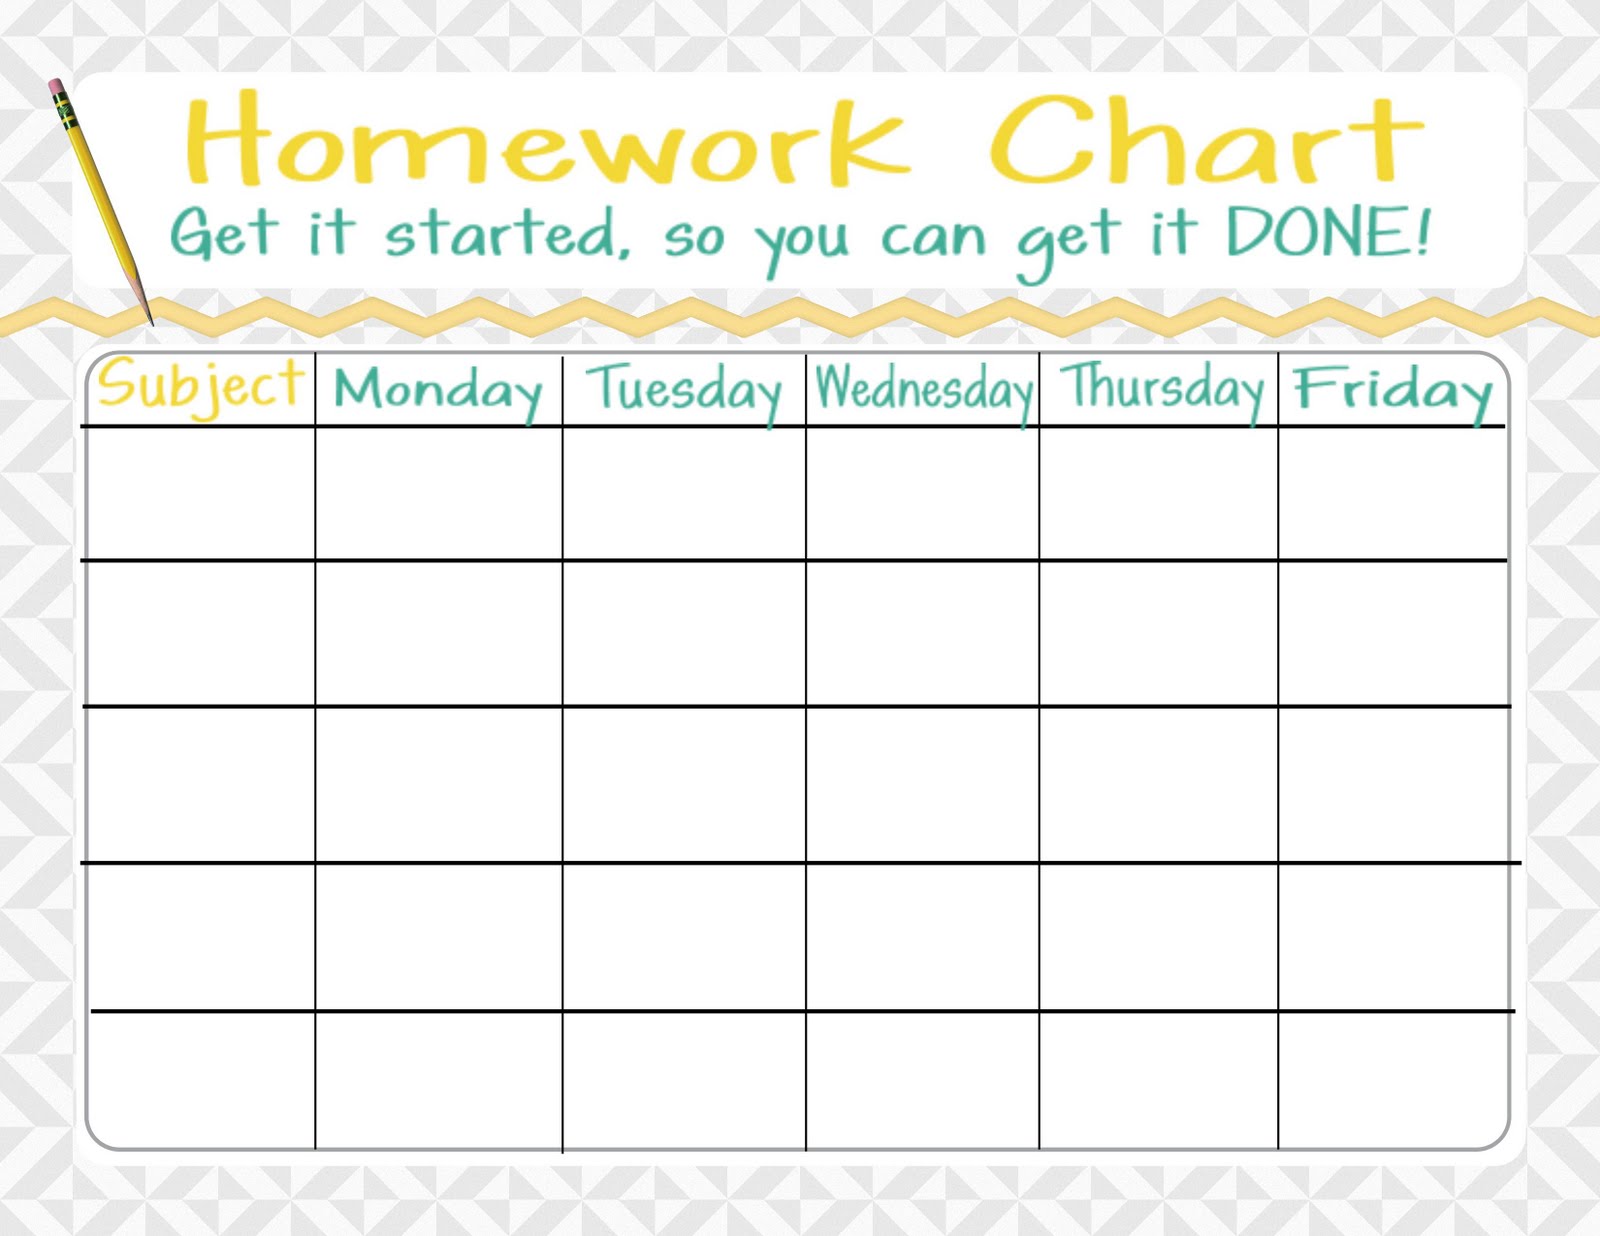 Reproducible homework record sheet for teachers